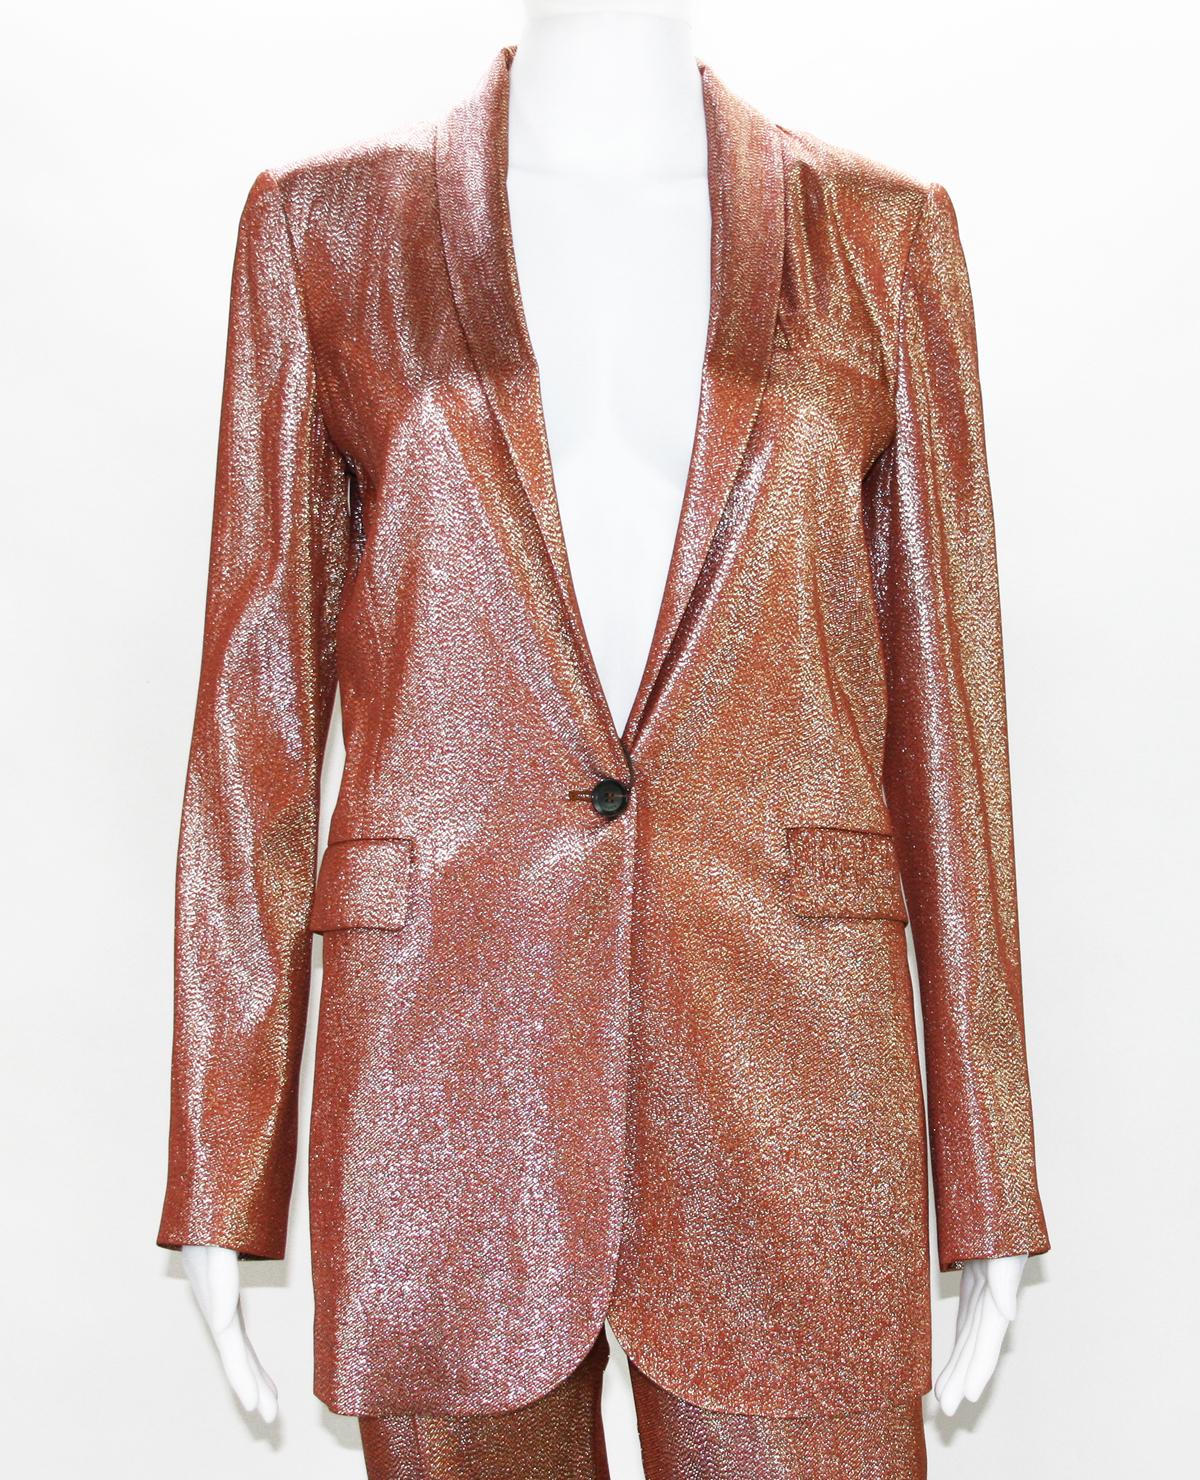 New $3950 Runway GUCCI Suit Iridescent Rust Liquid Lame Jacket & Pants size 38 1